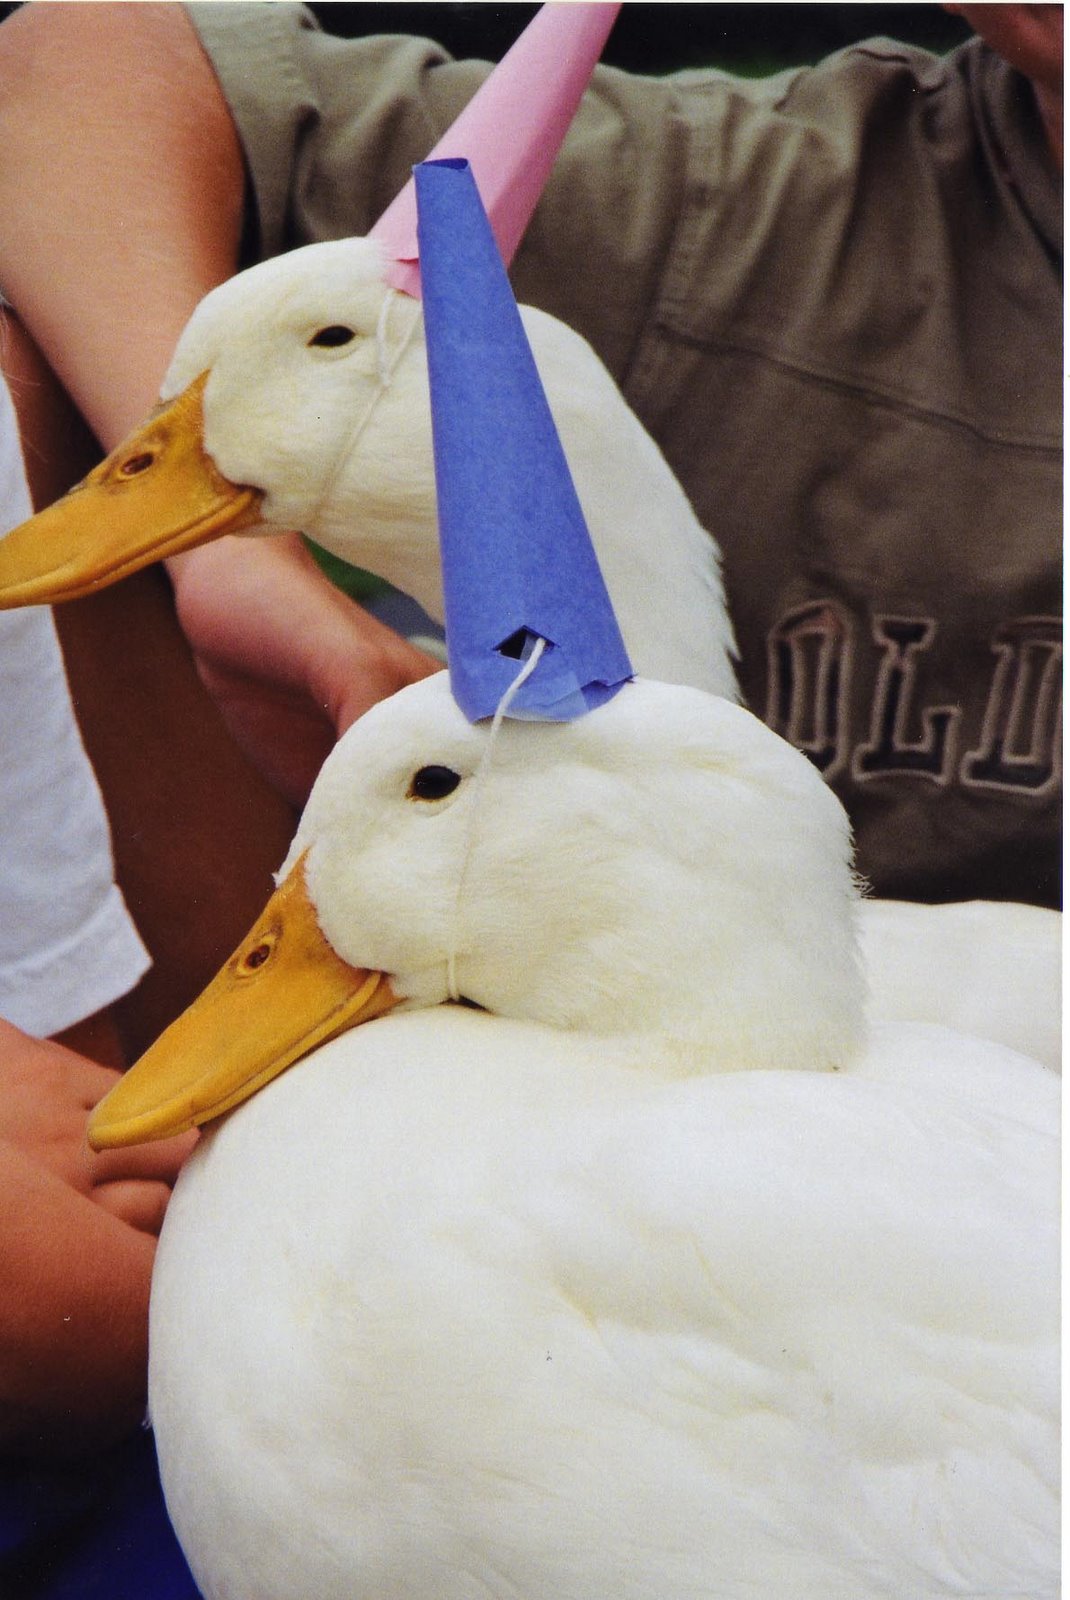 [ducks+party+hats.jpg]